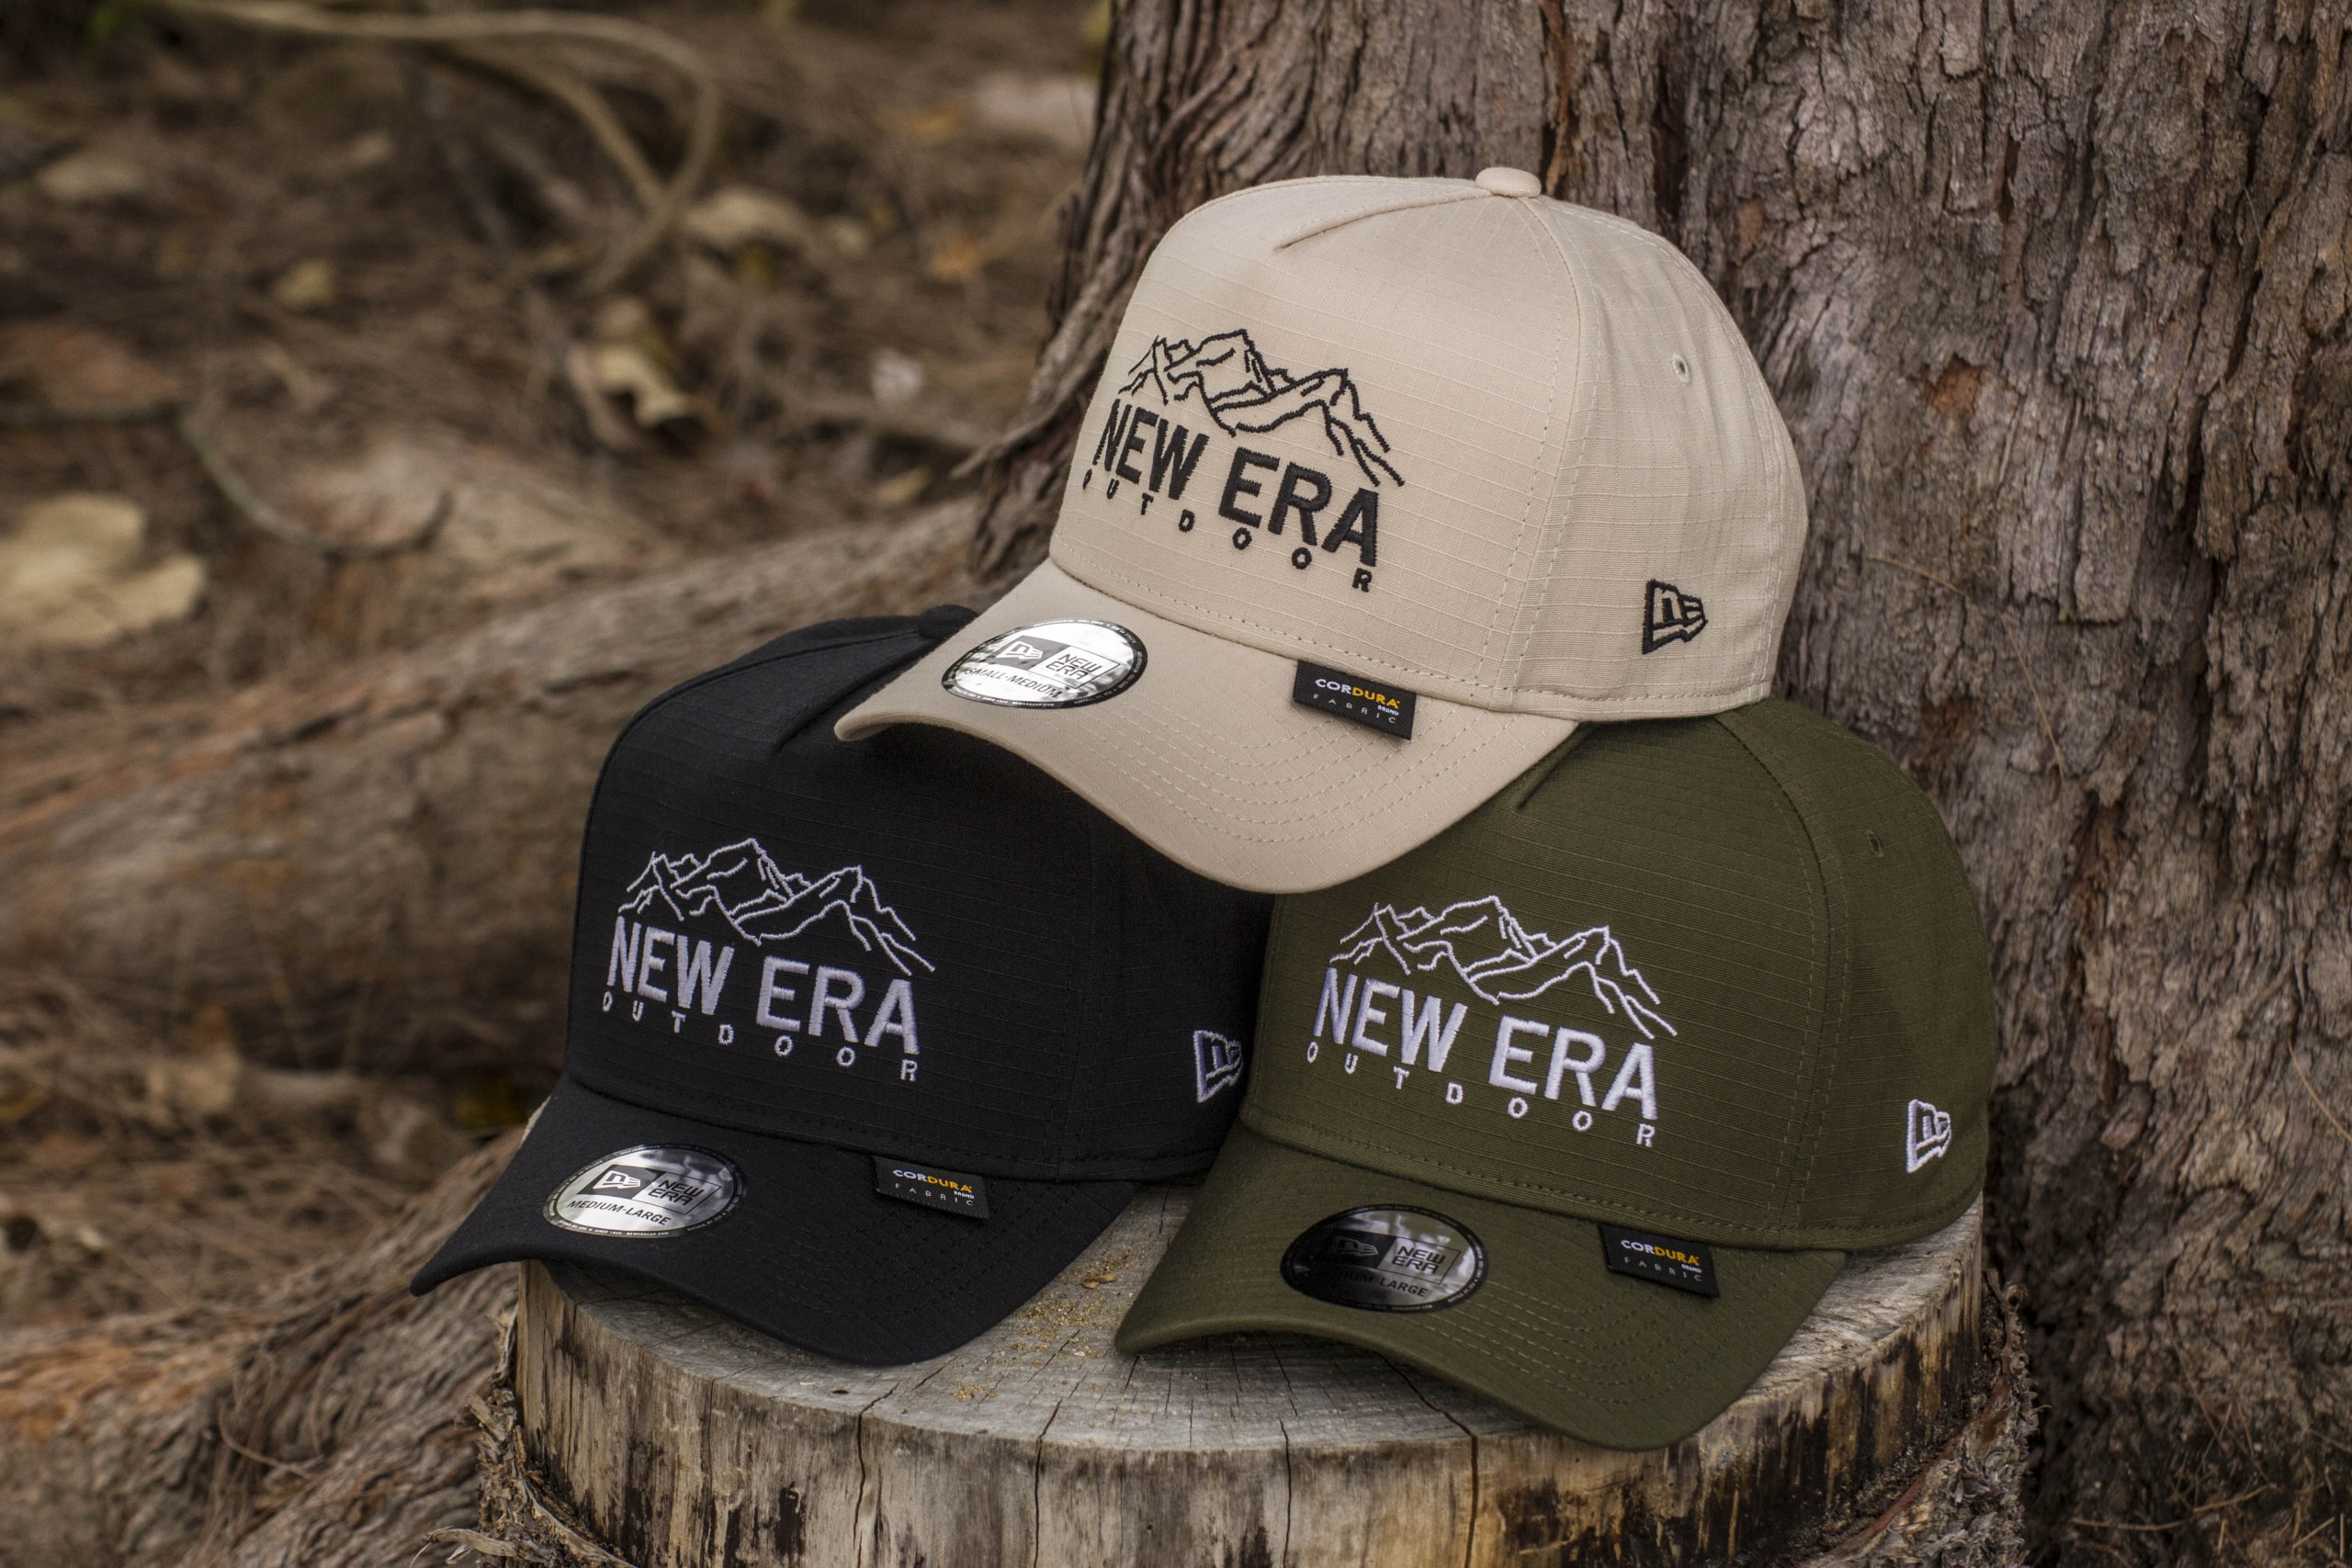 New Era 全新 MOUNTAINS 帽款系列正式發佈